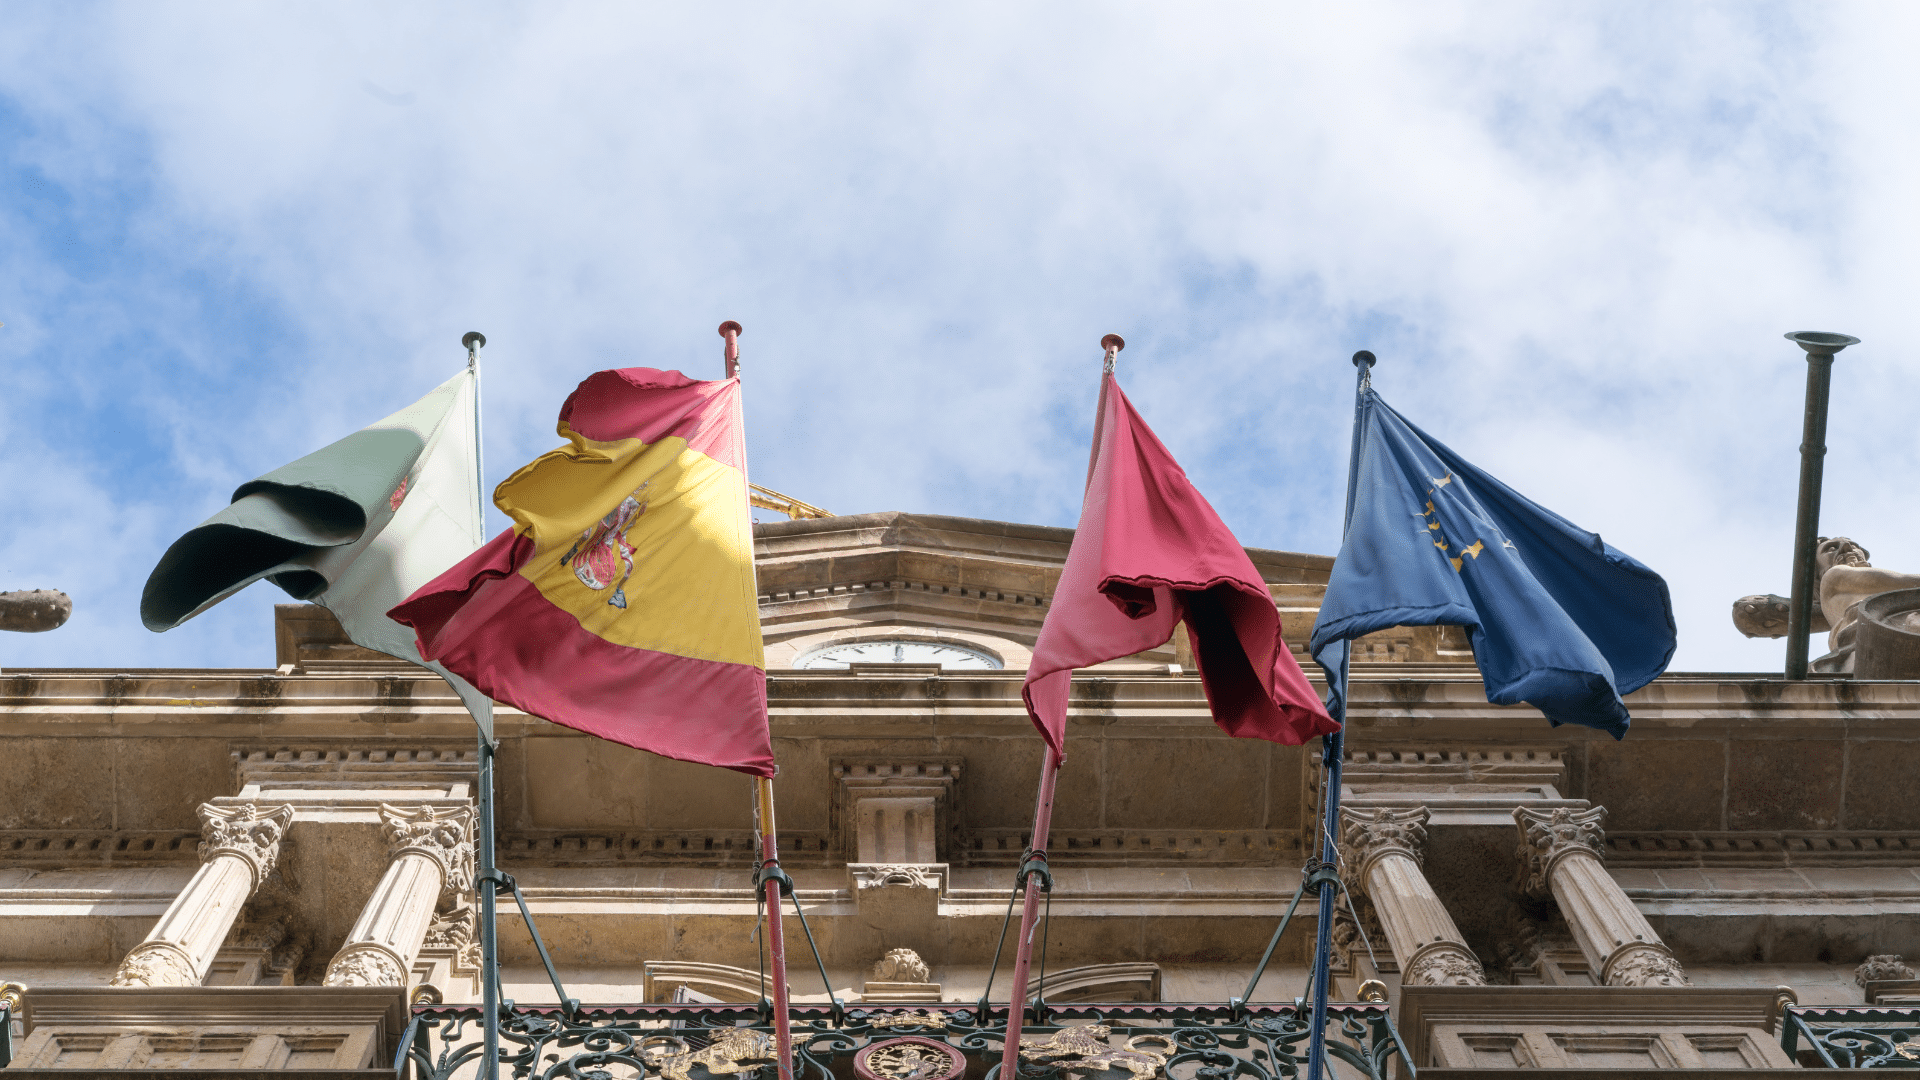 Les langues en Espagne : un enjeu devenu politique